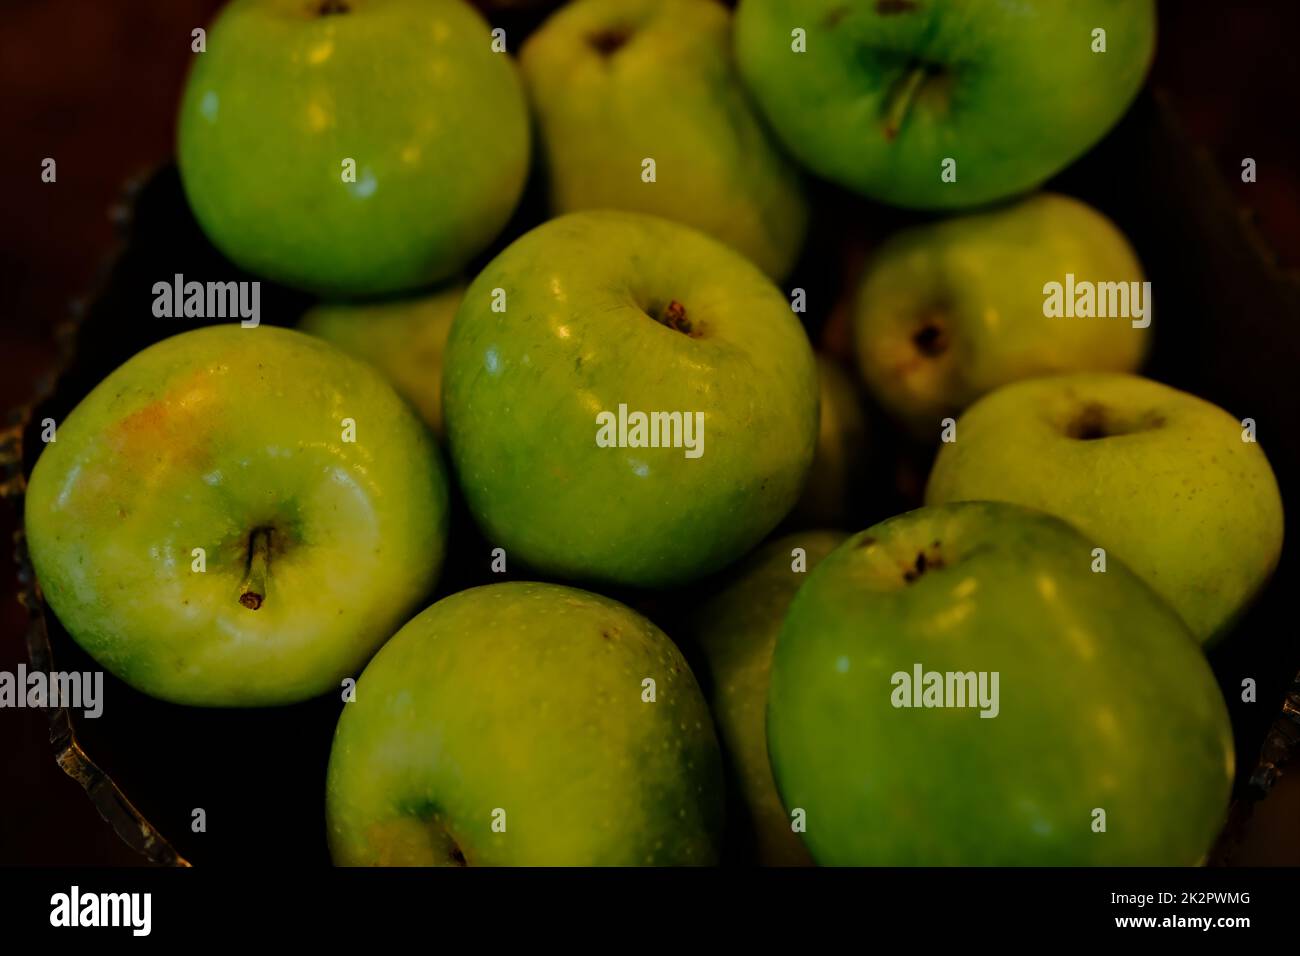 Green apple fruit backgrounds overhead perspective, healthy organic fresh Stock Photo